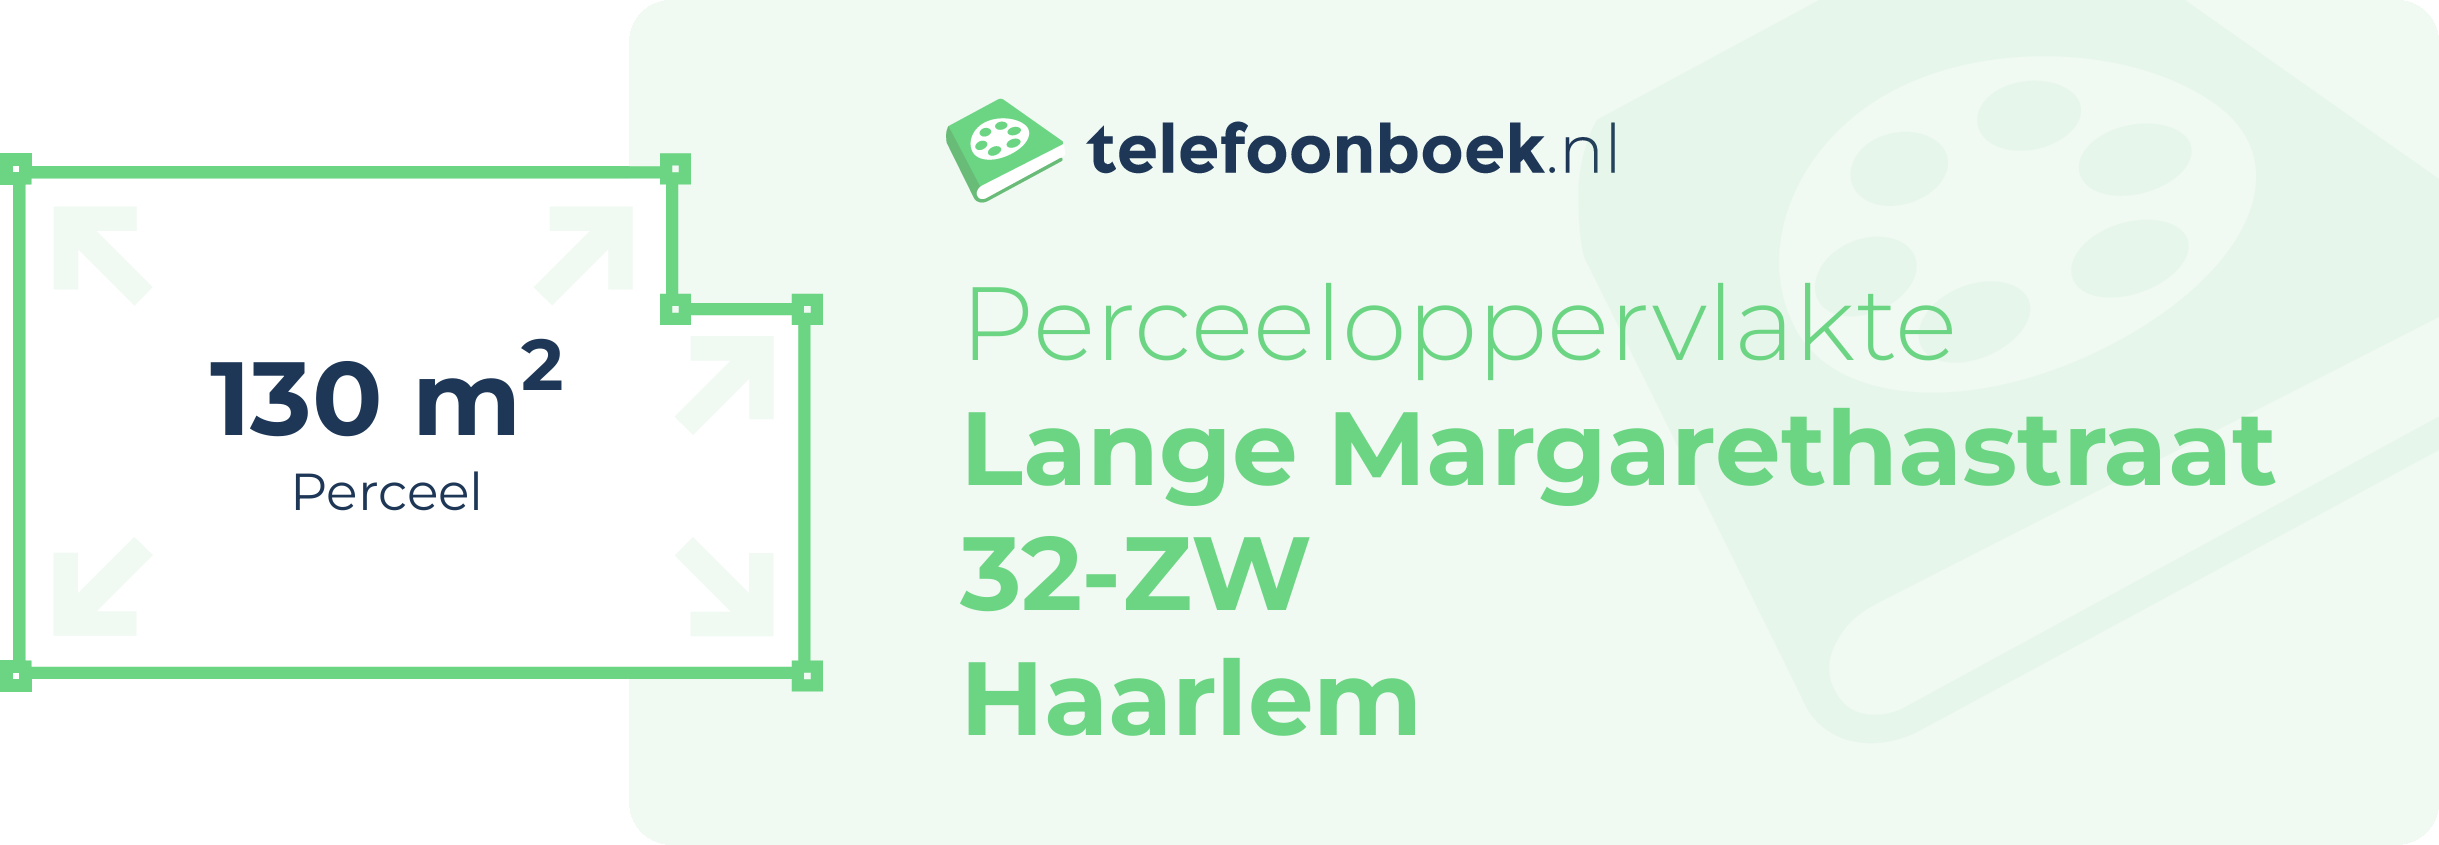 Perceeloppervlakte Lange Margarethastraat 32-ZW Haarlem